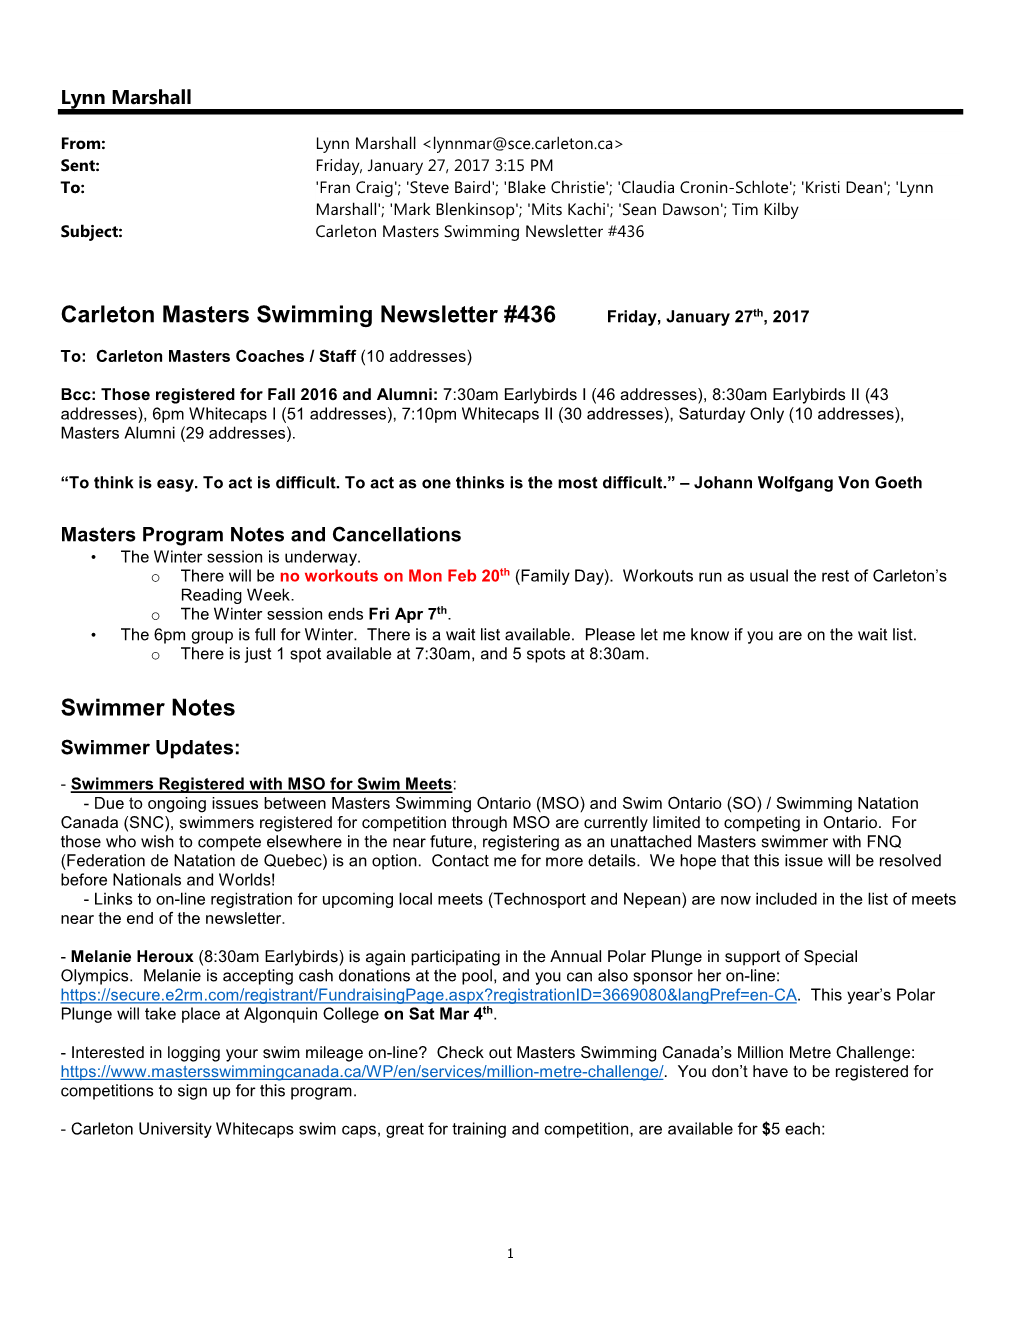 Carleton Masters Swimming Newsletter #436 Swimmer Notes